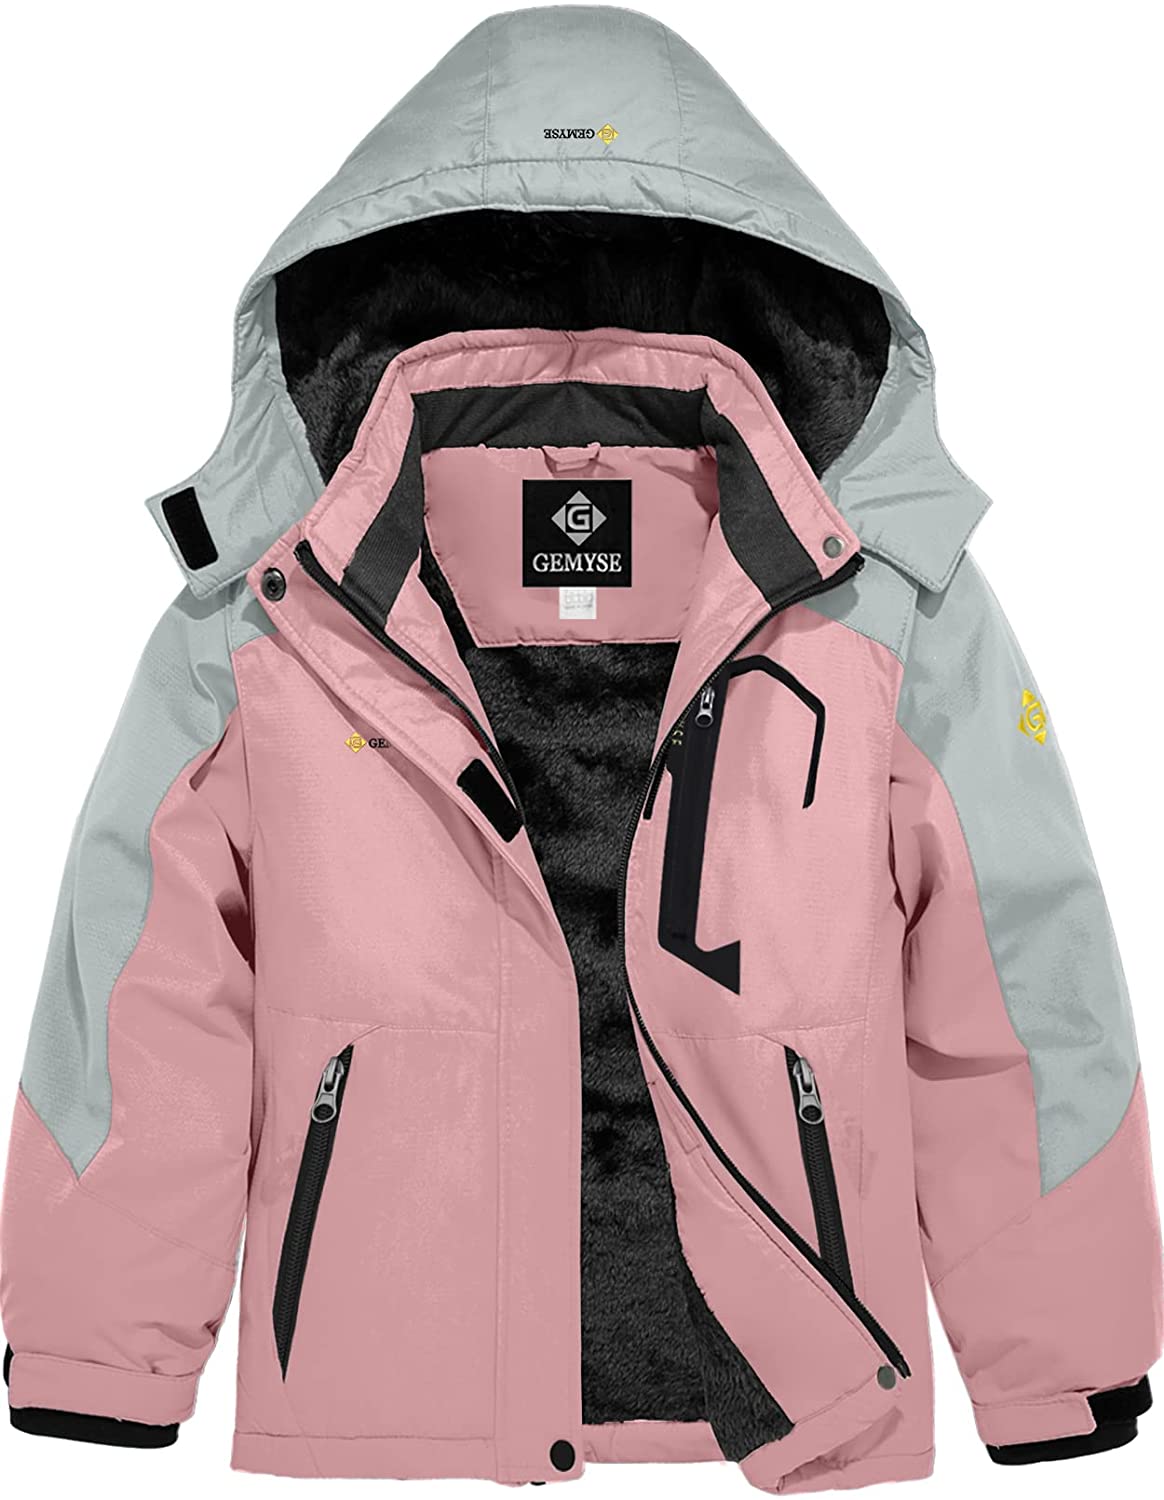 GEMYSE Girls Waterproof Ski Snow Jacket Fleece Windproof Winter Jacket with Hood